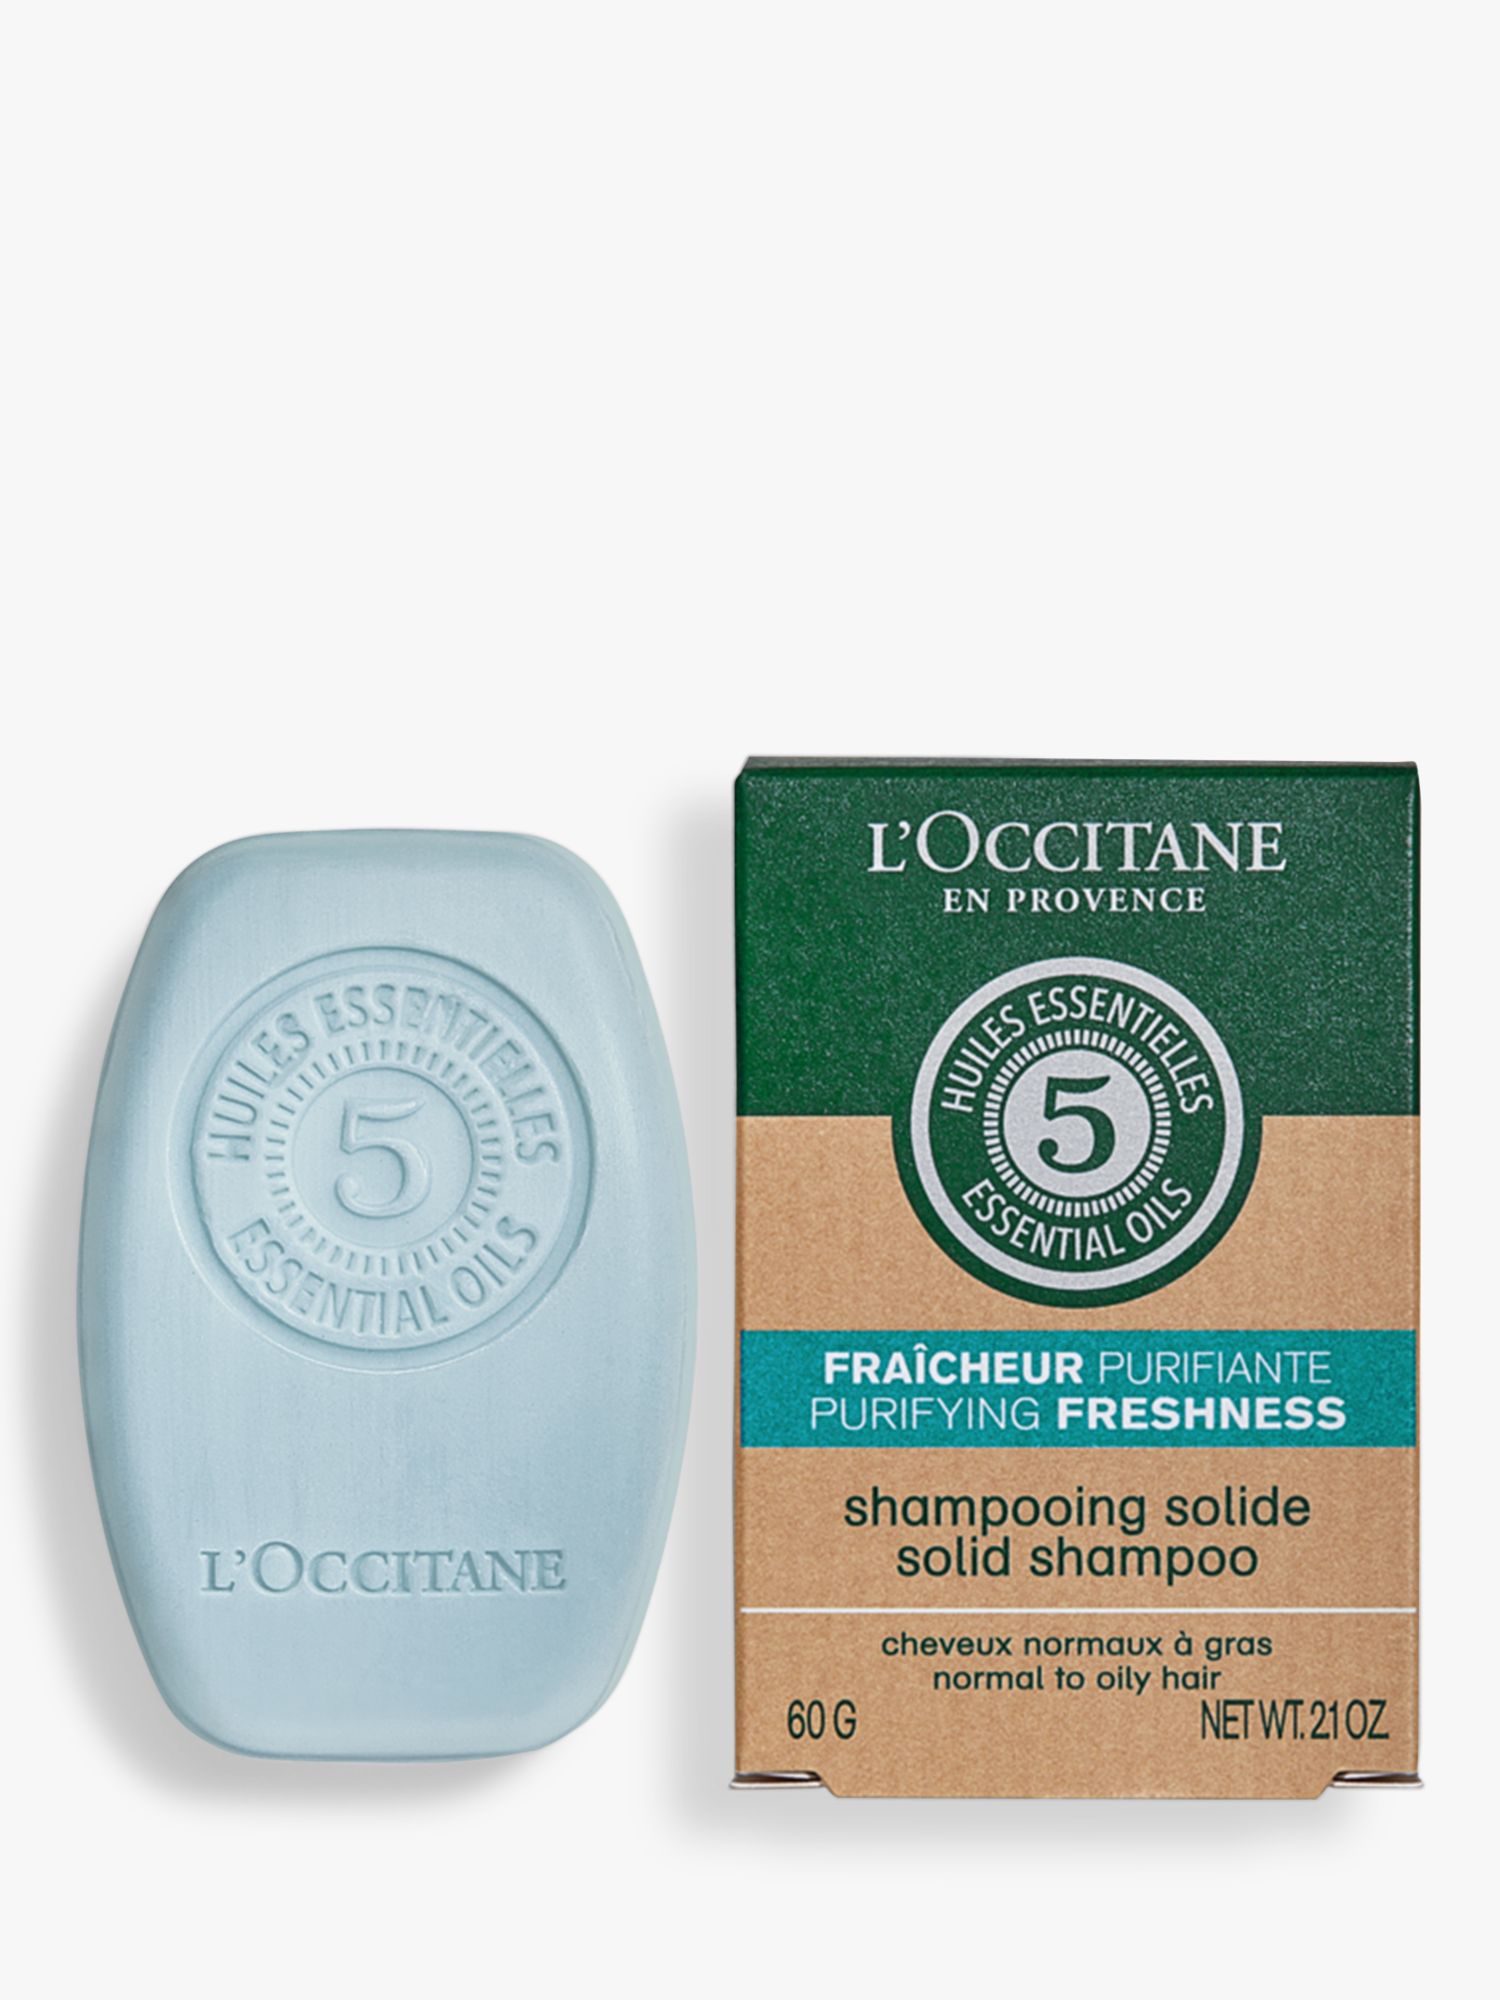 L'OCCITANE Purifying Freshness Solid Shampoo, 60g 1